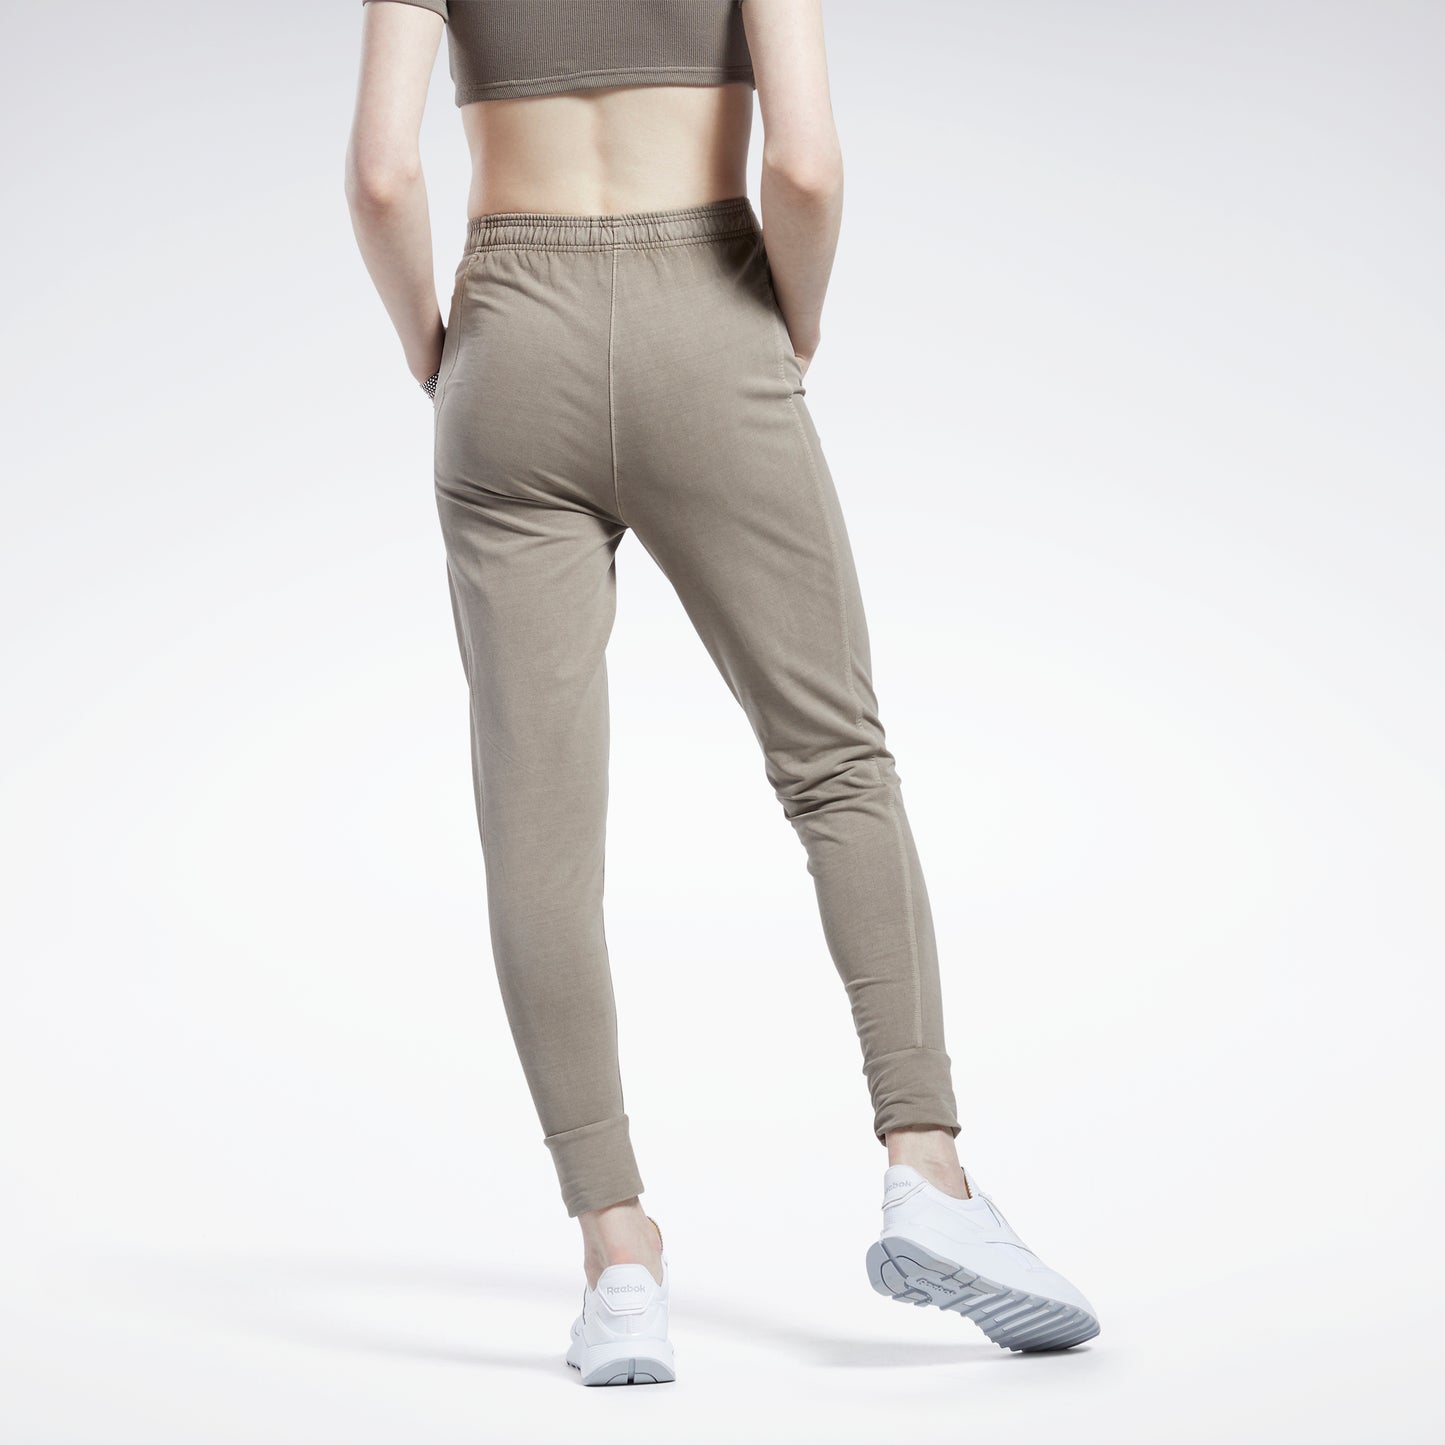 Reebok Women's Jogger Pants - Clothing